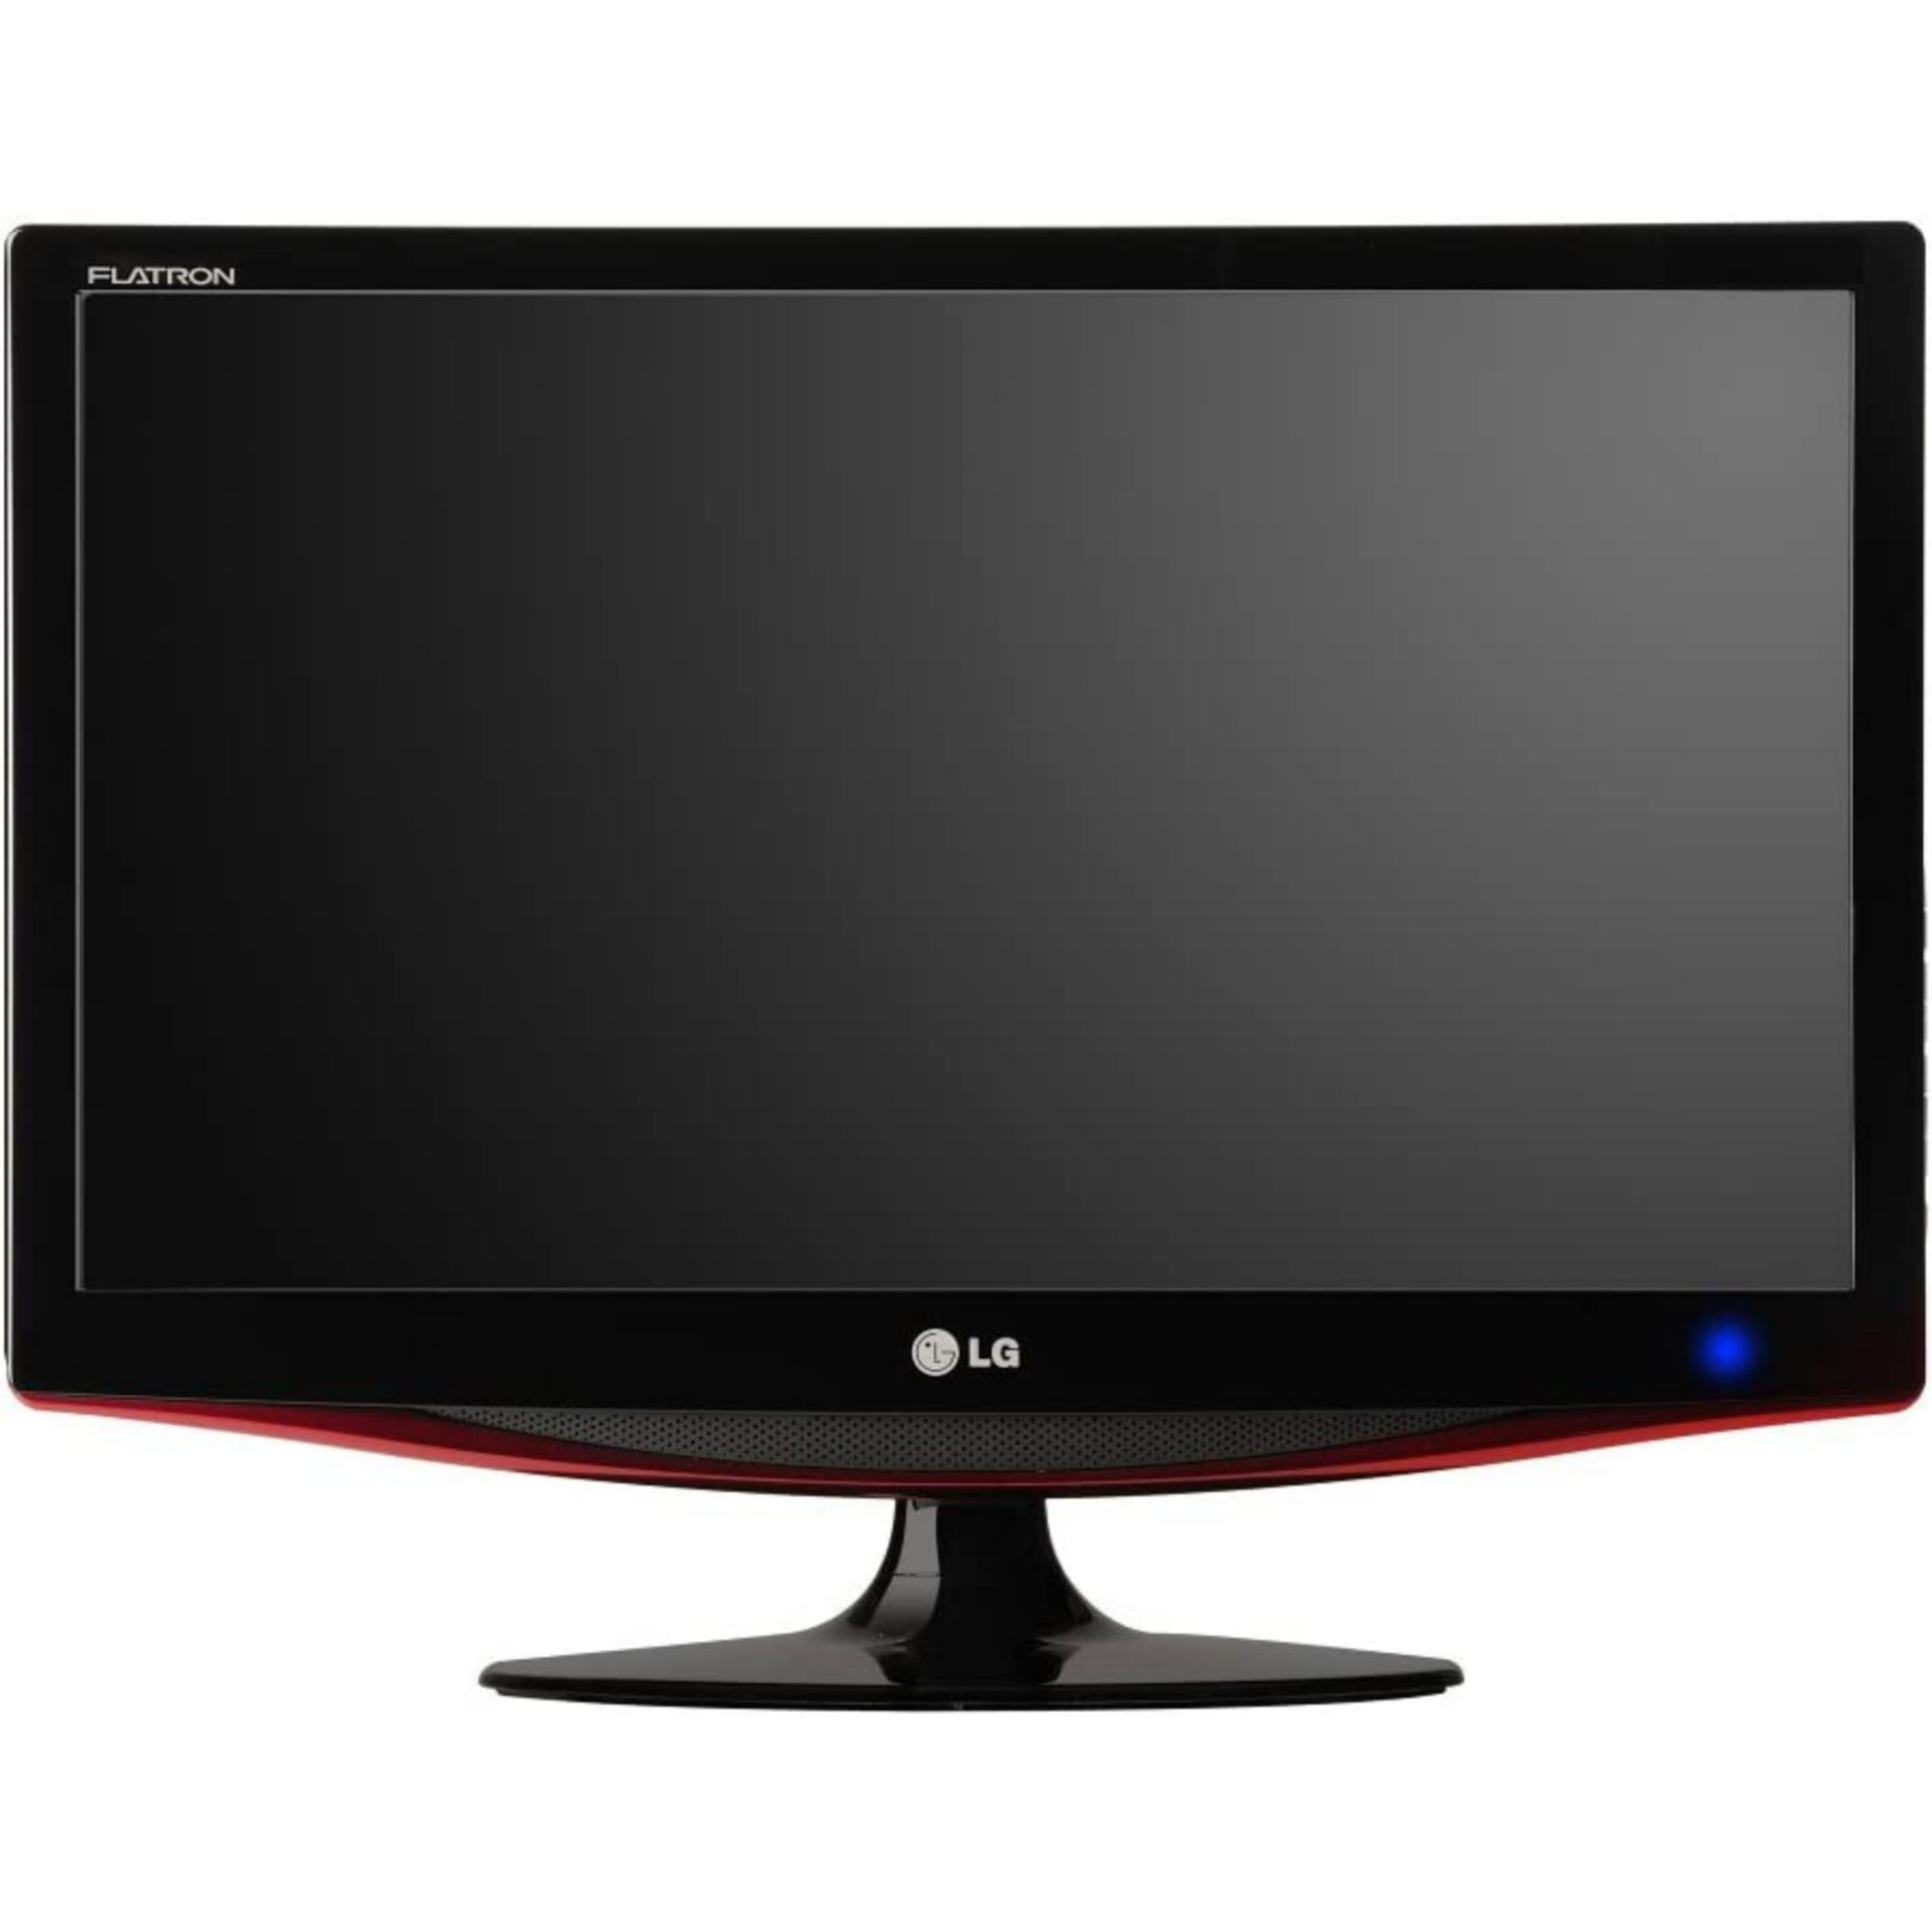 LG 23 Inch FLATRON M237WDP Full HD LCD TV - London Used